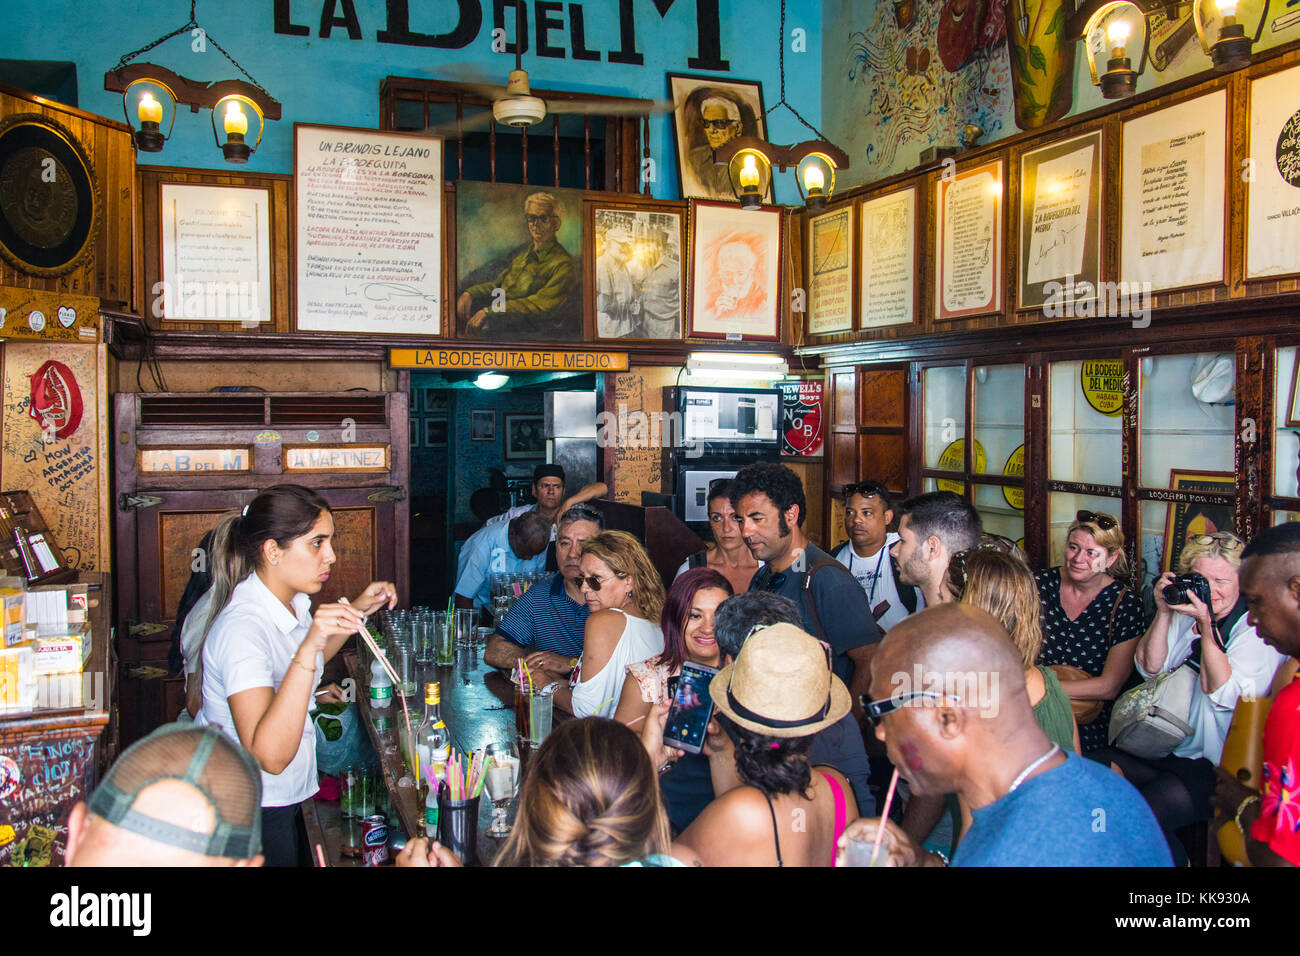 La Bodeguita Del Medio famous bar in Old Havana, Cuba Stock Photo